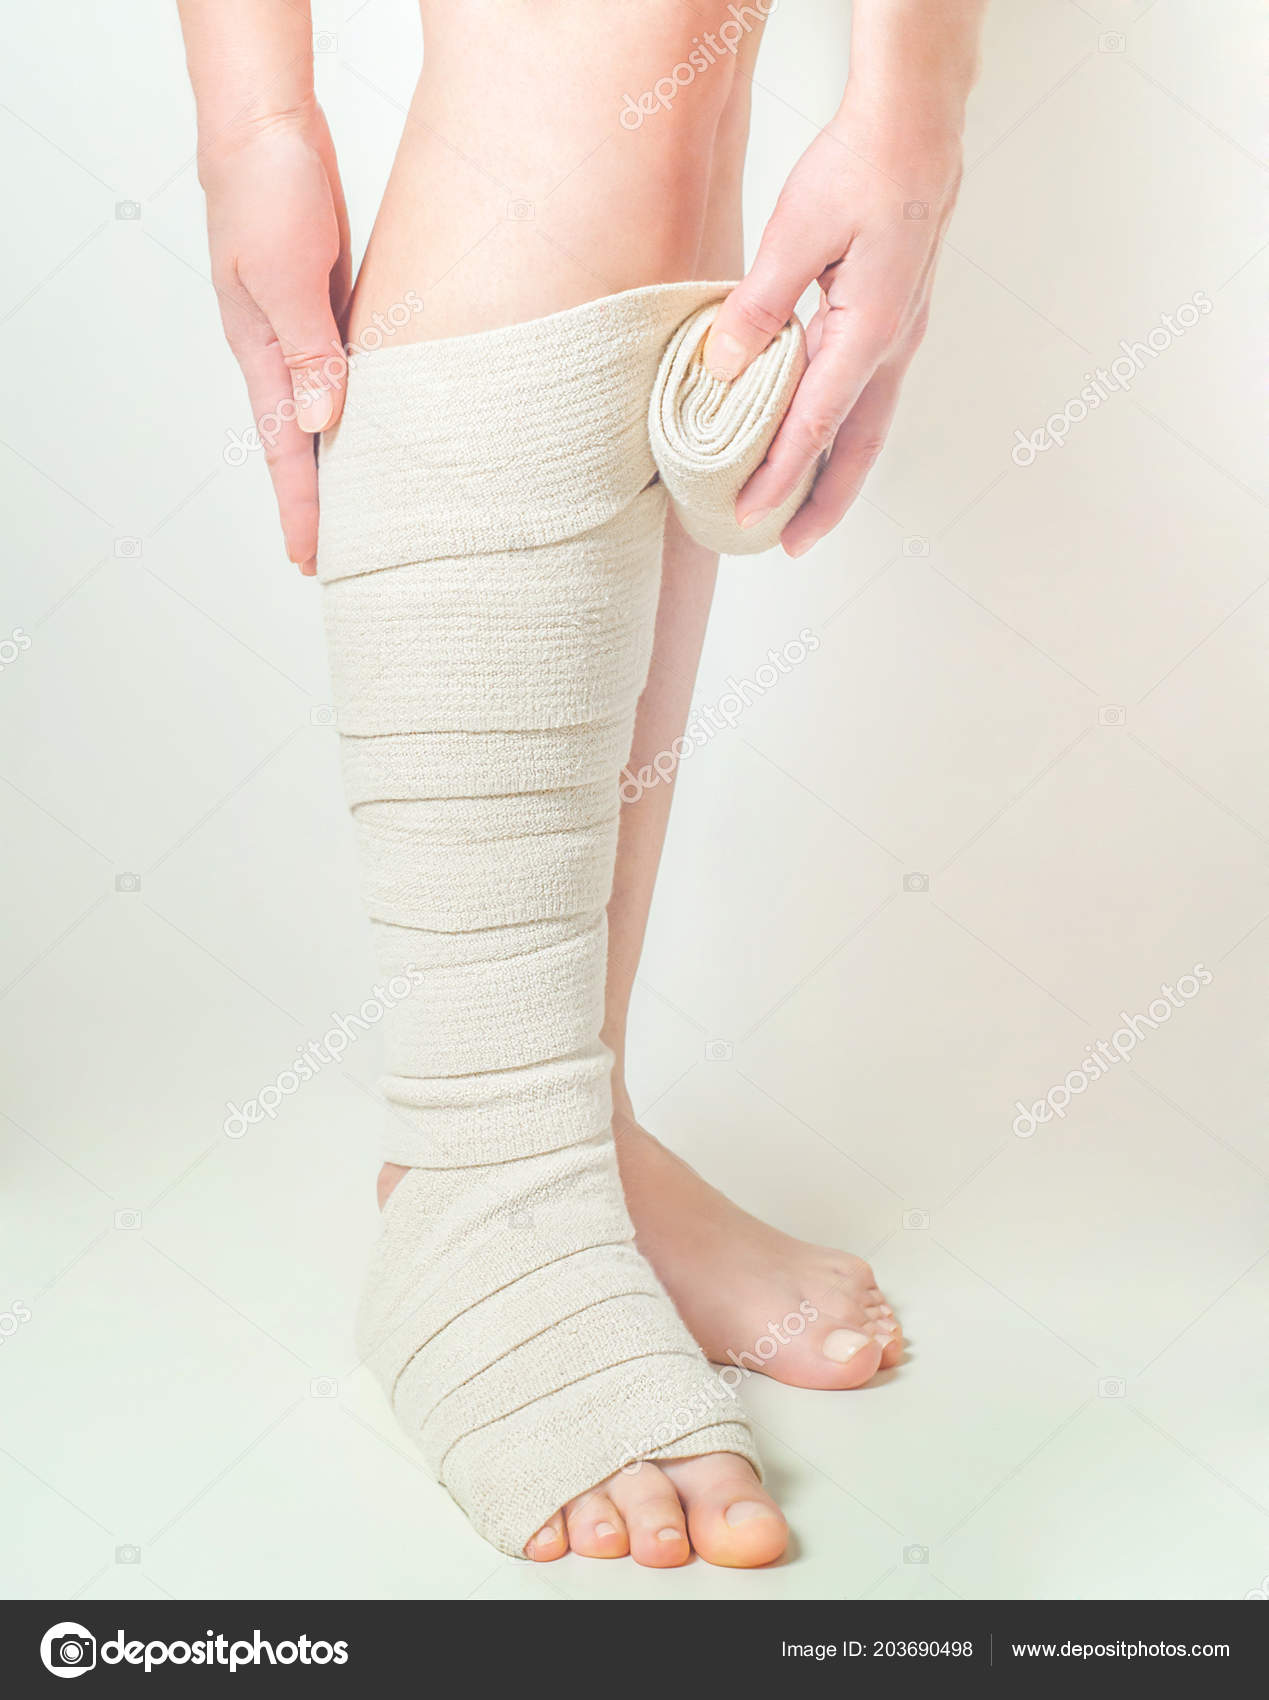 bandage elastica varicoza swing muschii i varicose